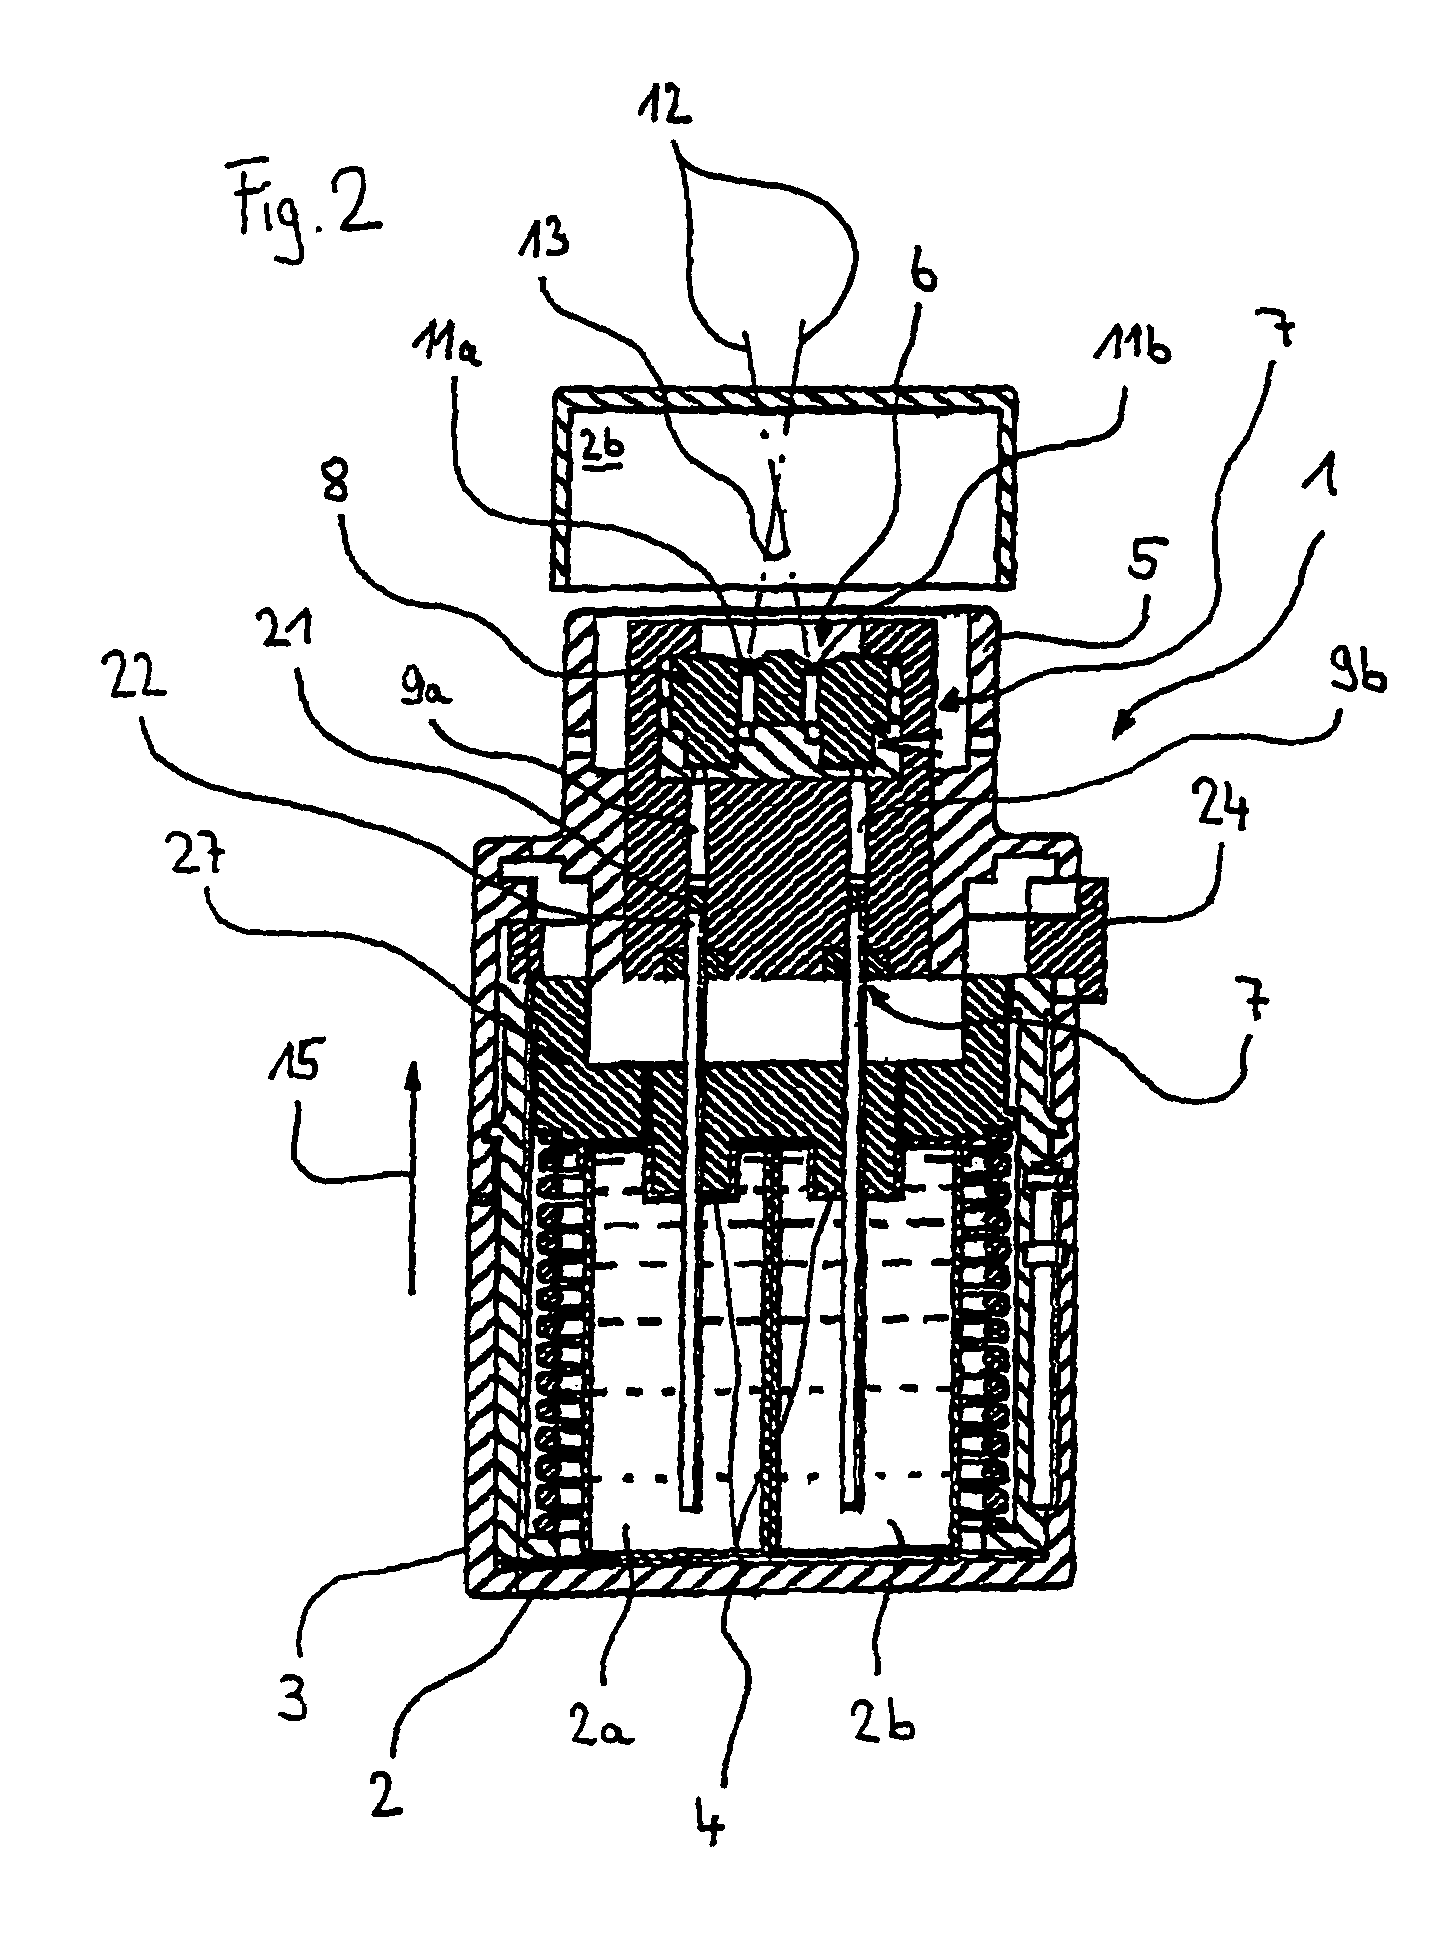 Atomizer for dispensing liquids for medical purposes